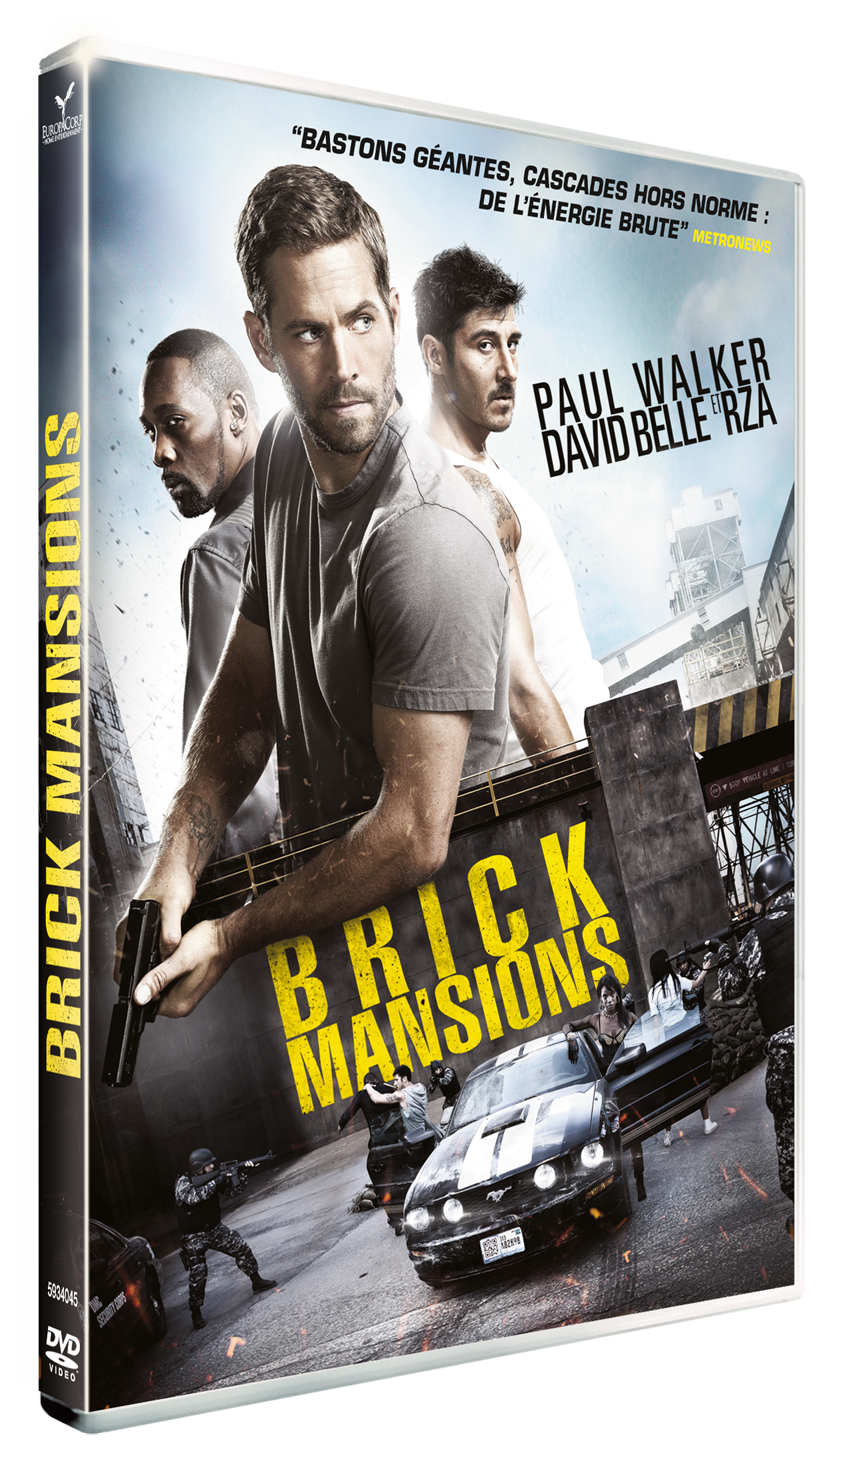 brick mansion movie poster